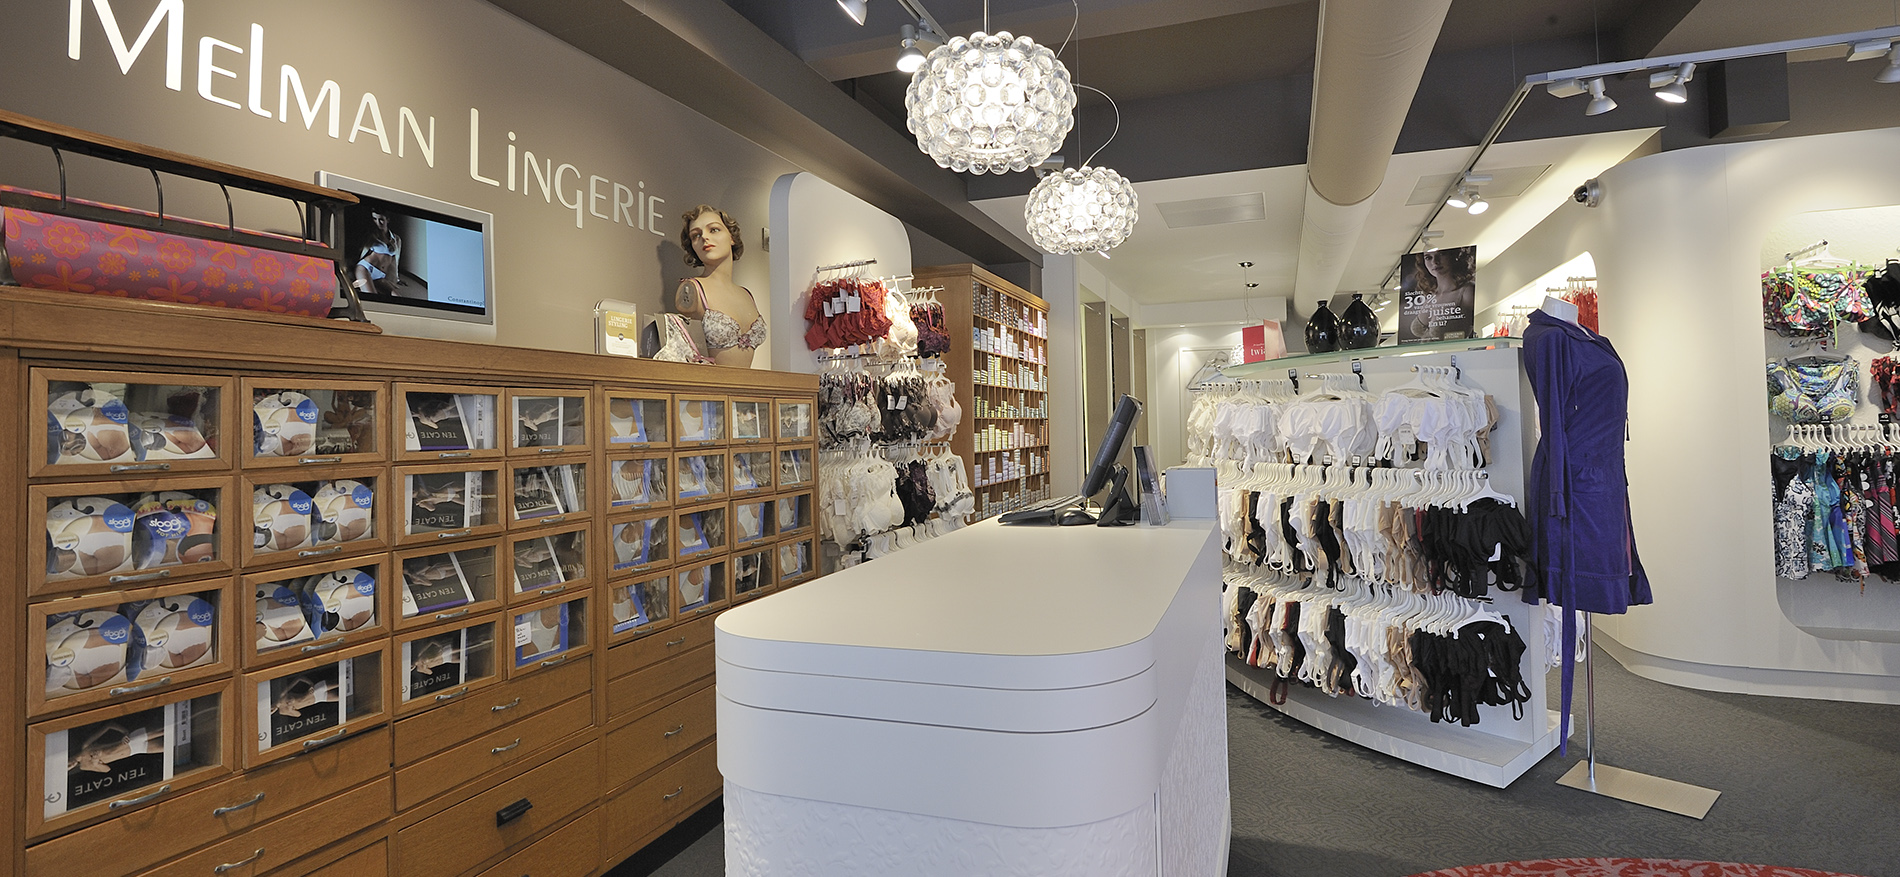 Melman Lingerie, Sassenheim : Agencement magasin de lingerie - 